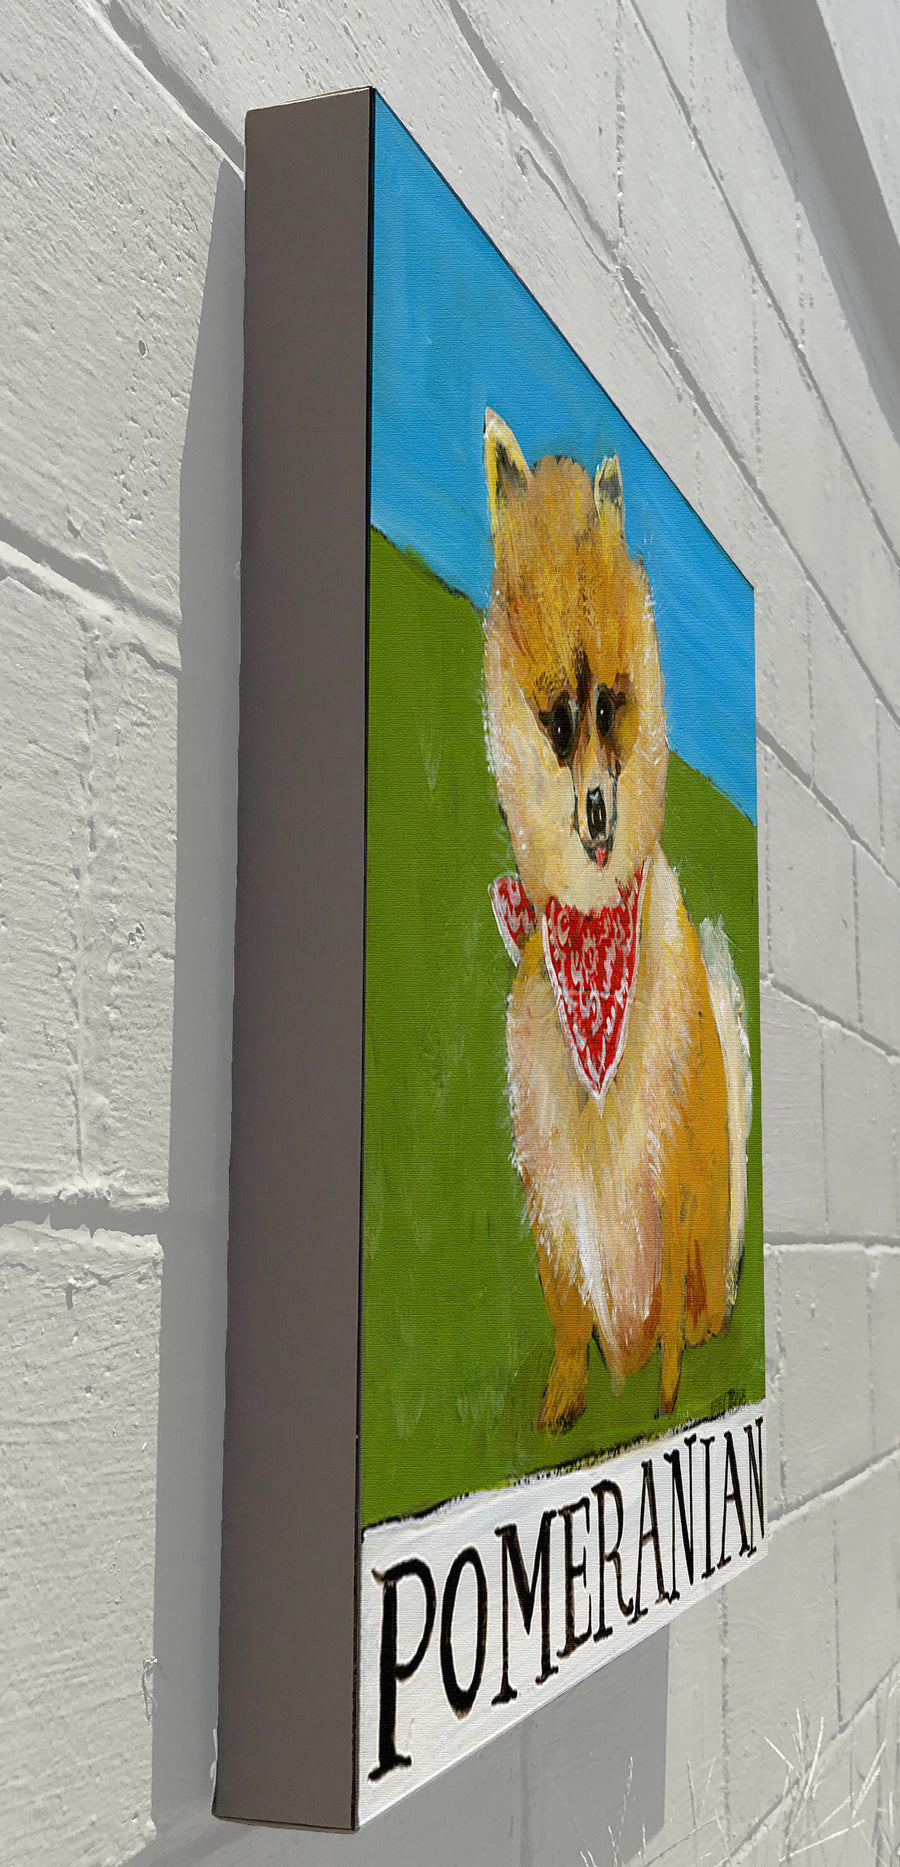 Gallery Grand - Doggie - Pomeranian